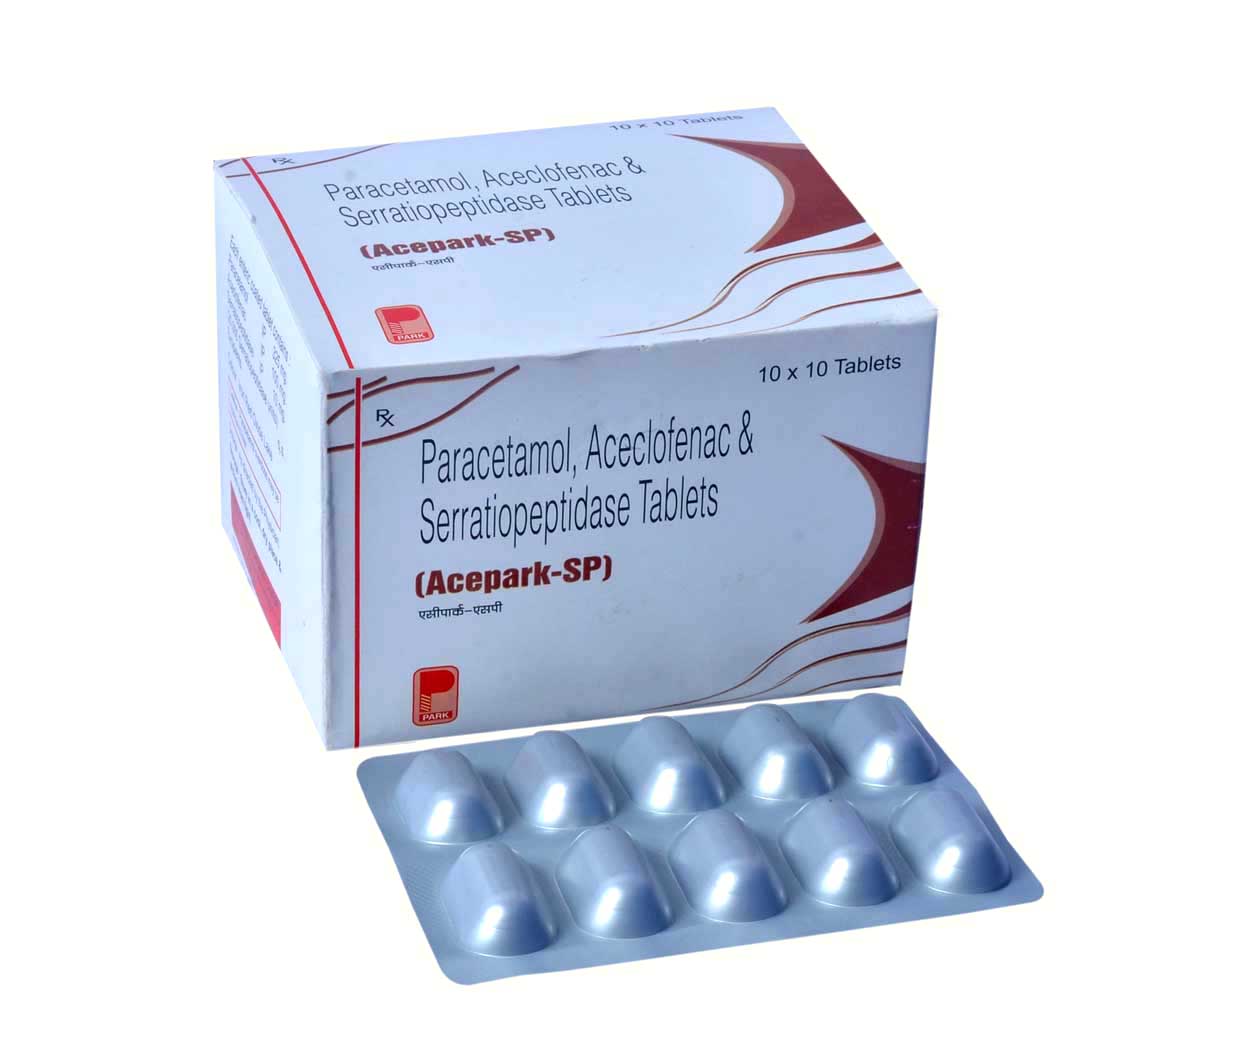 Product Name: Acepark SP, Compositions of Acepark SP are Paracetamol, Aceclofenac & Serratiopeptidase Tablets - Park Pharmaceuticals